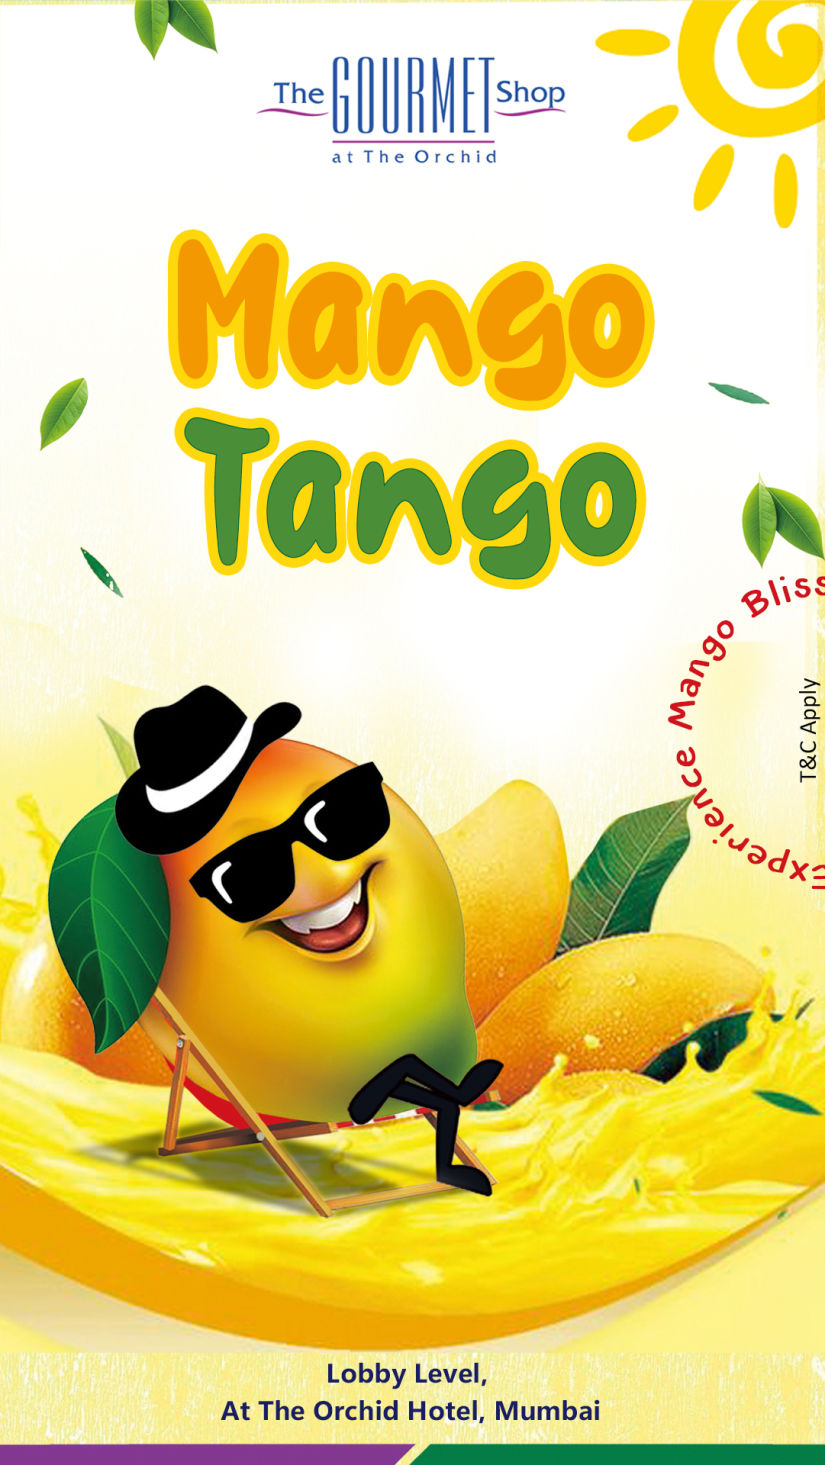 Orchid Mango Tango Story